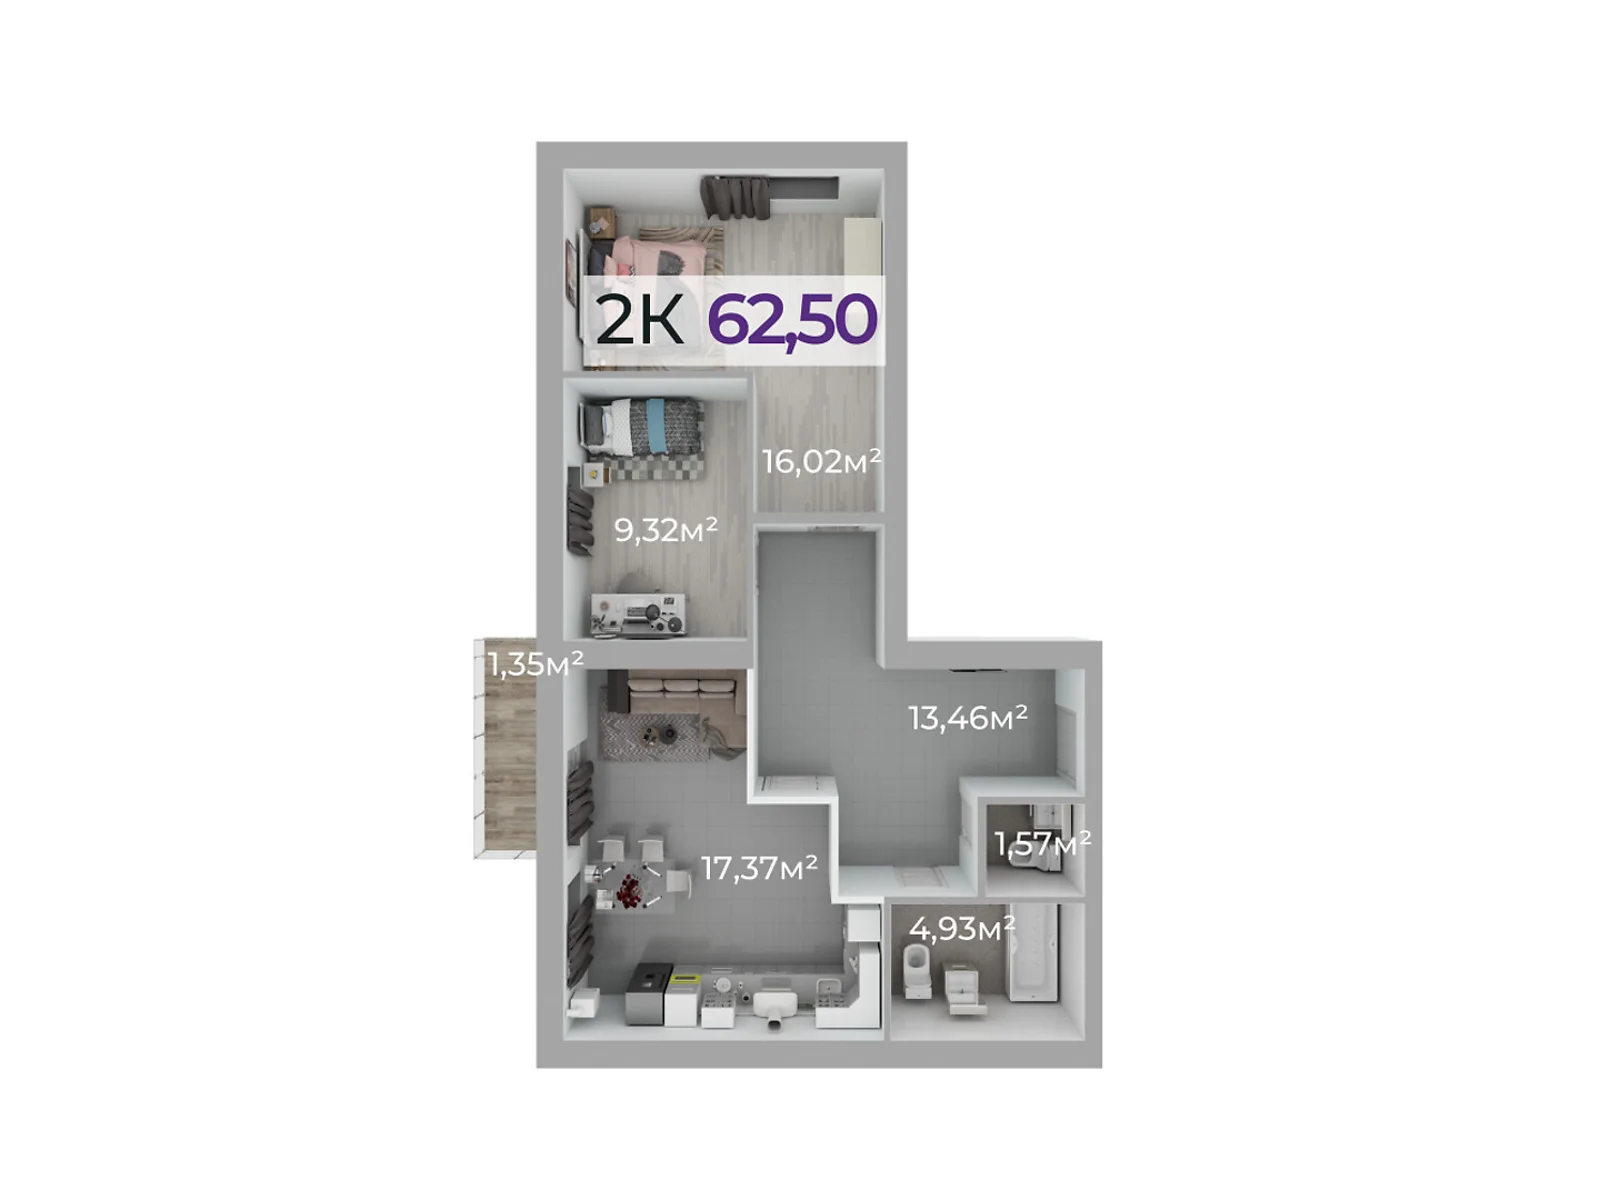 Продается 2-комнатная квартира 62.5 кв. м в Ивано-Франковске, цена: 49375 $